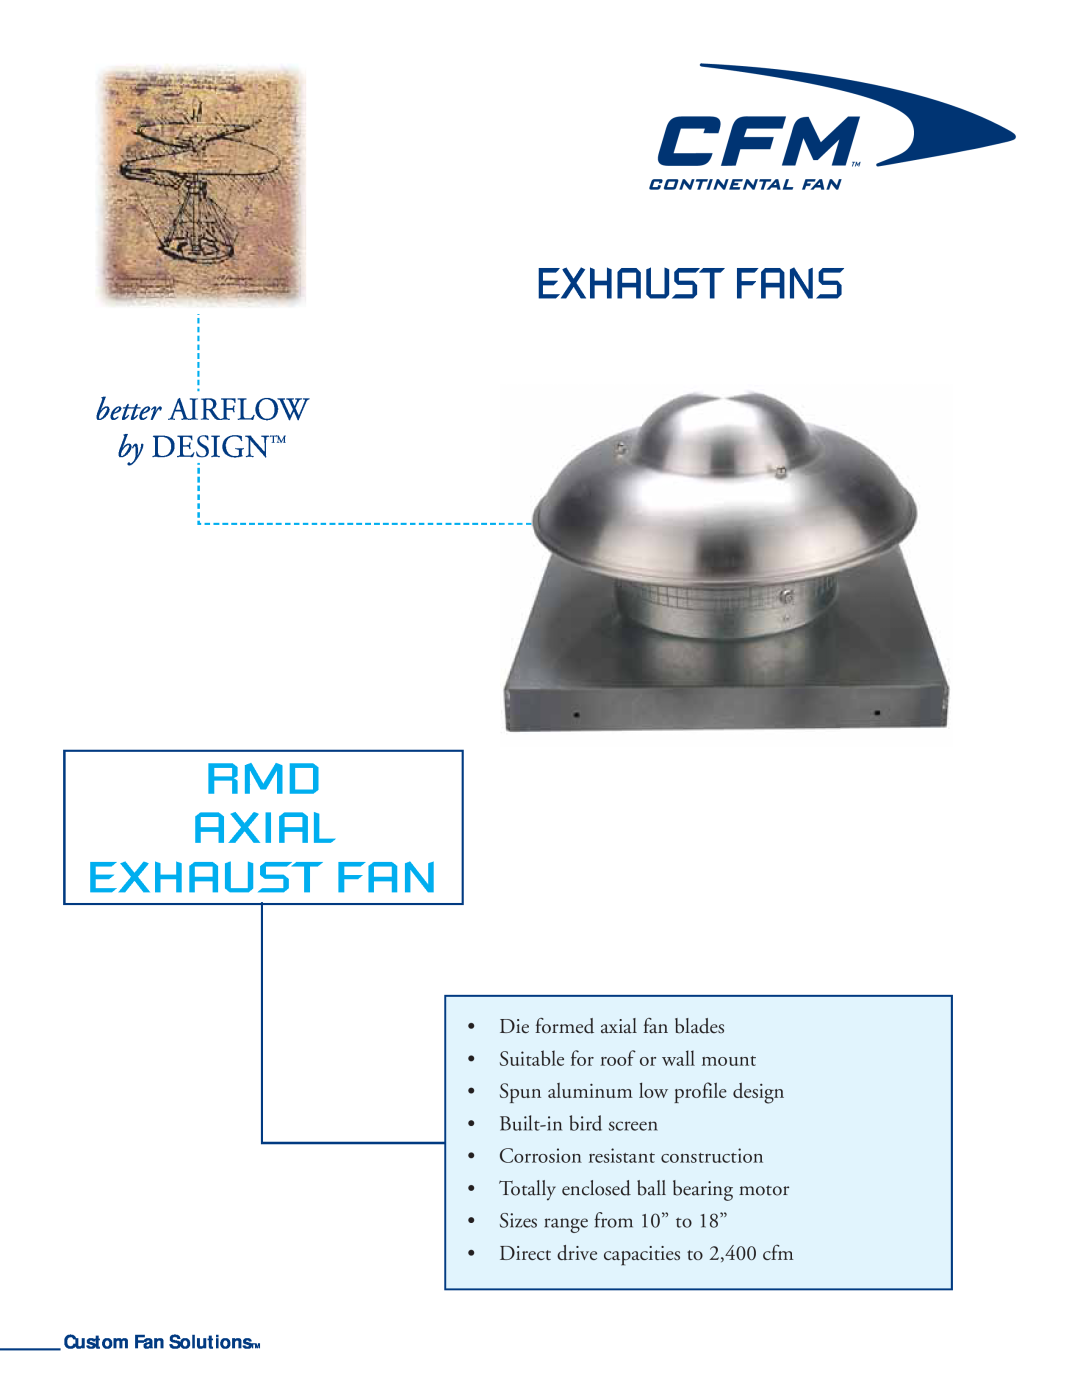 CFM RMD-10, RMD-0807 manual Rmd Axial Exhaust Fan, Exhaust Fans, better AIRFLOW, by DESIGNTM, Custom Fan SolutionsTM 